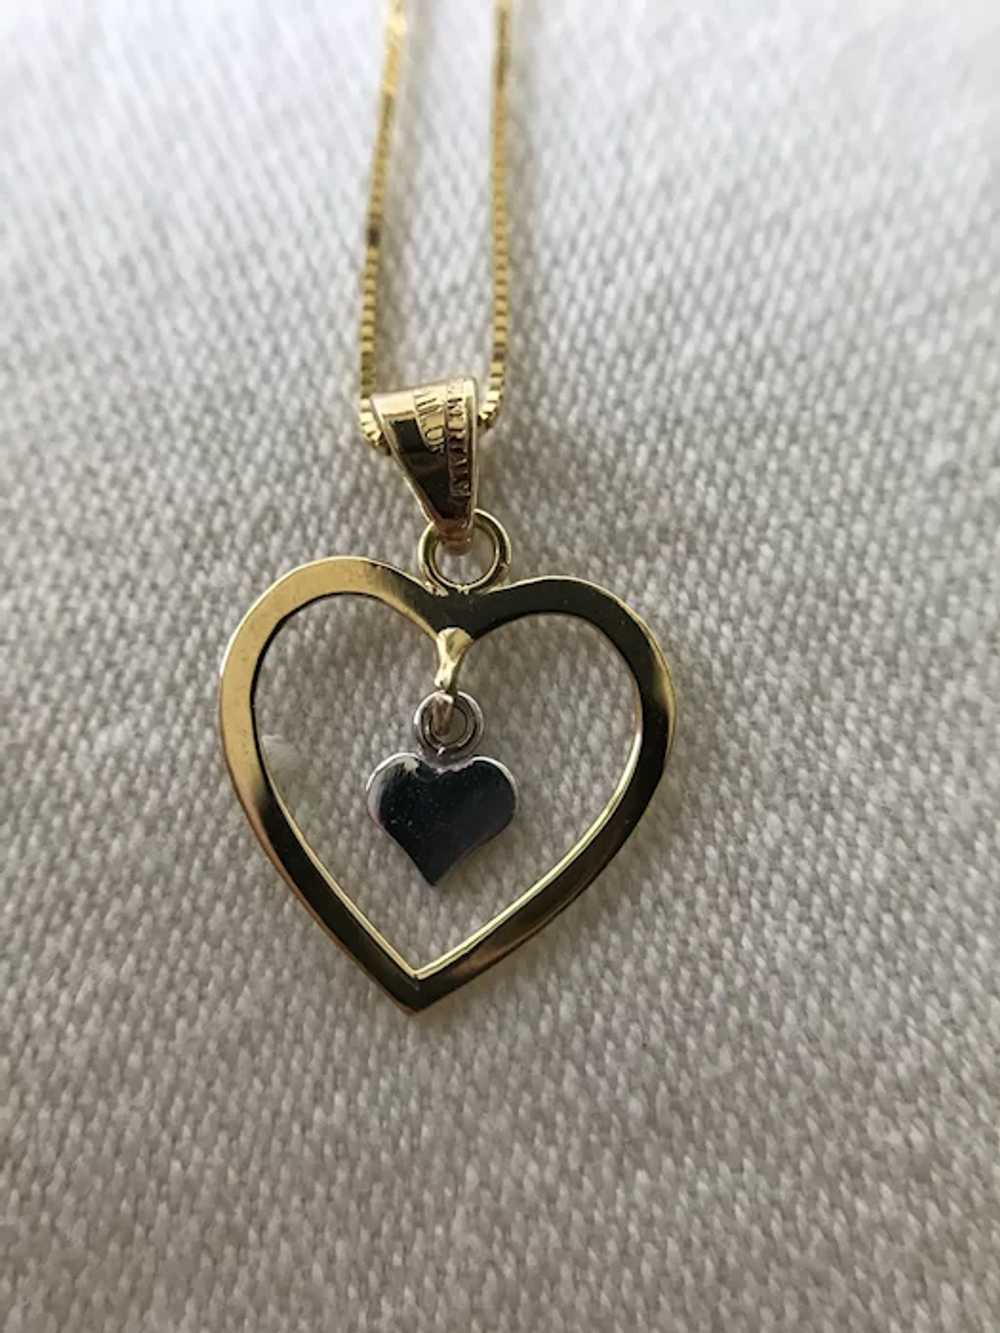 Etched 14K Gold Heart Pendant Necklace - image 2